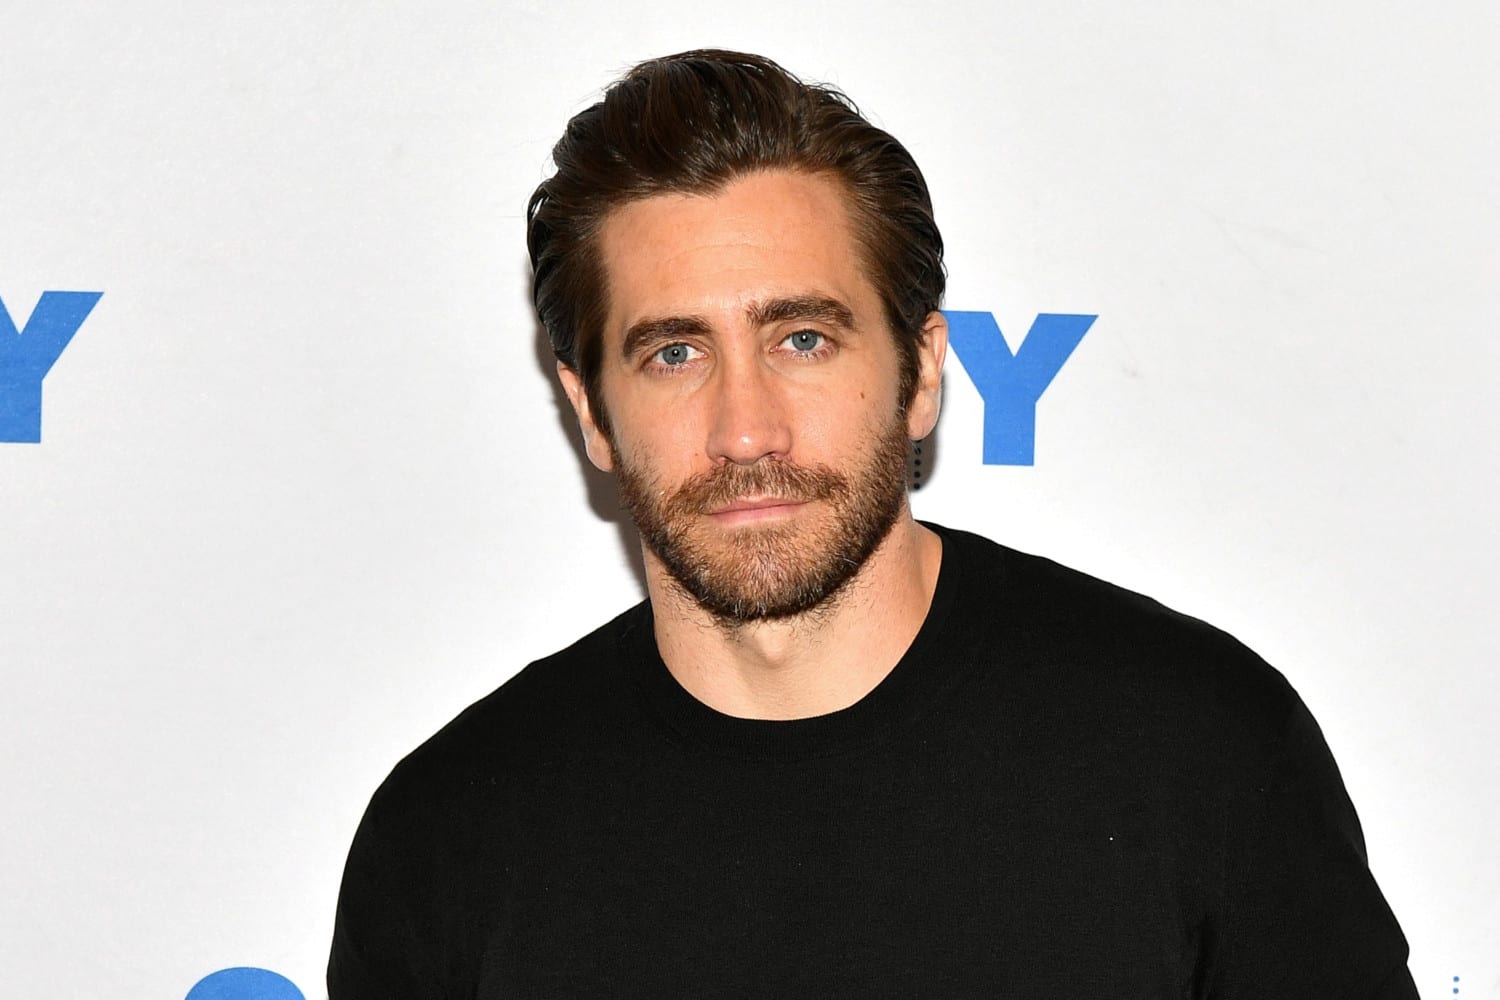 92nd Street Y Presents Jake Gyllenhaal In Conversation Followed By A Screening Of 'Stronger'